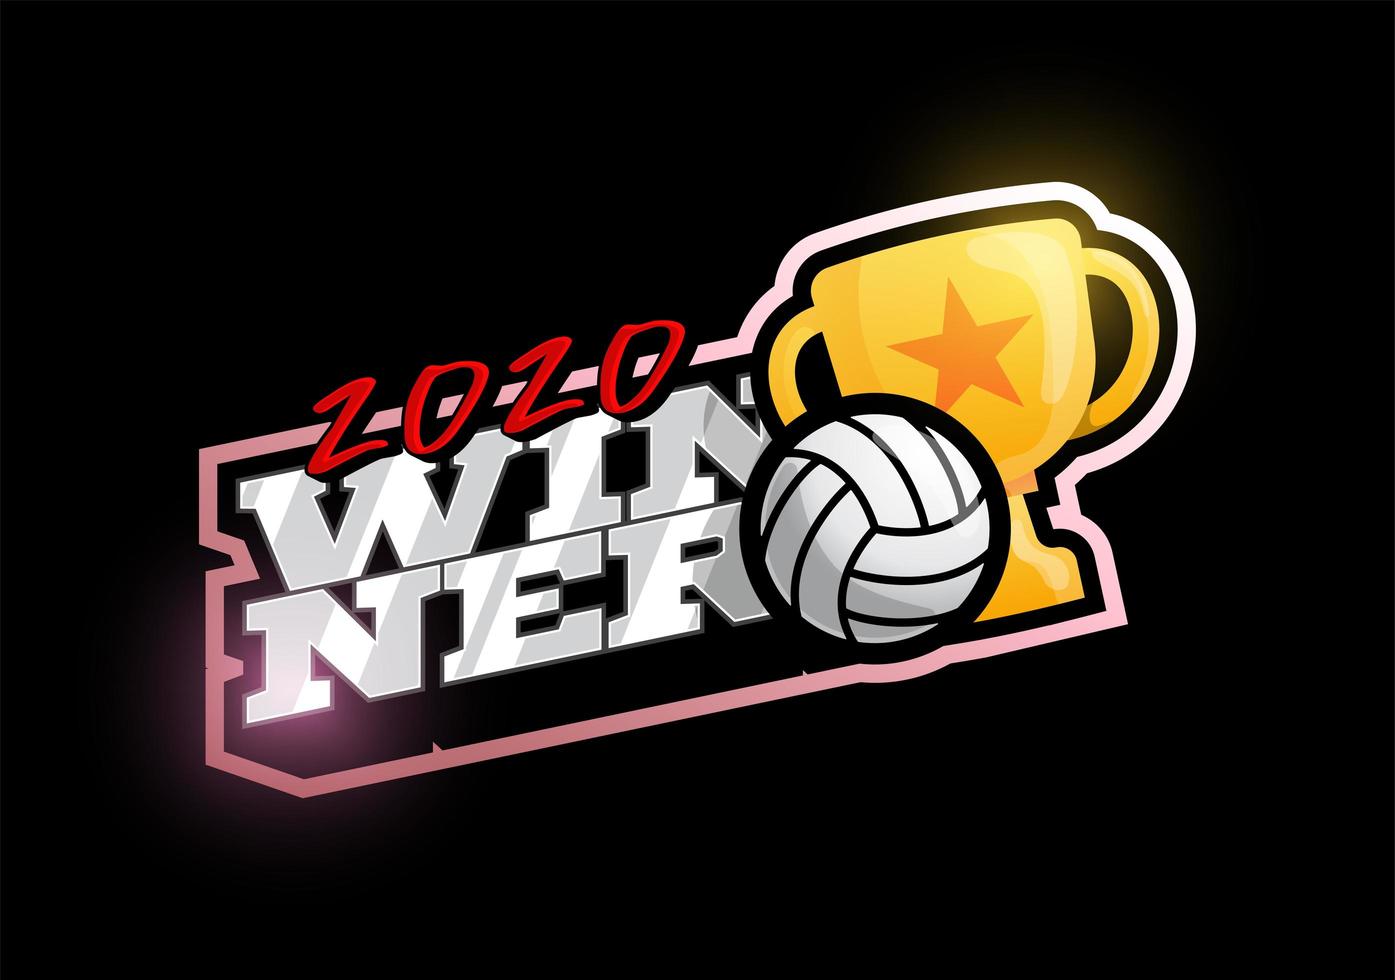 logo vectoriel de volleyball gagnant 2020